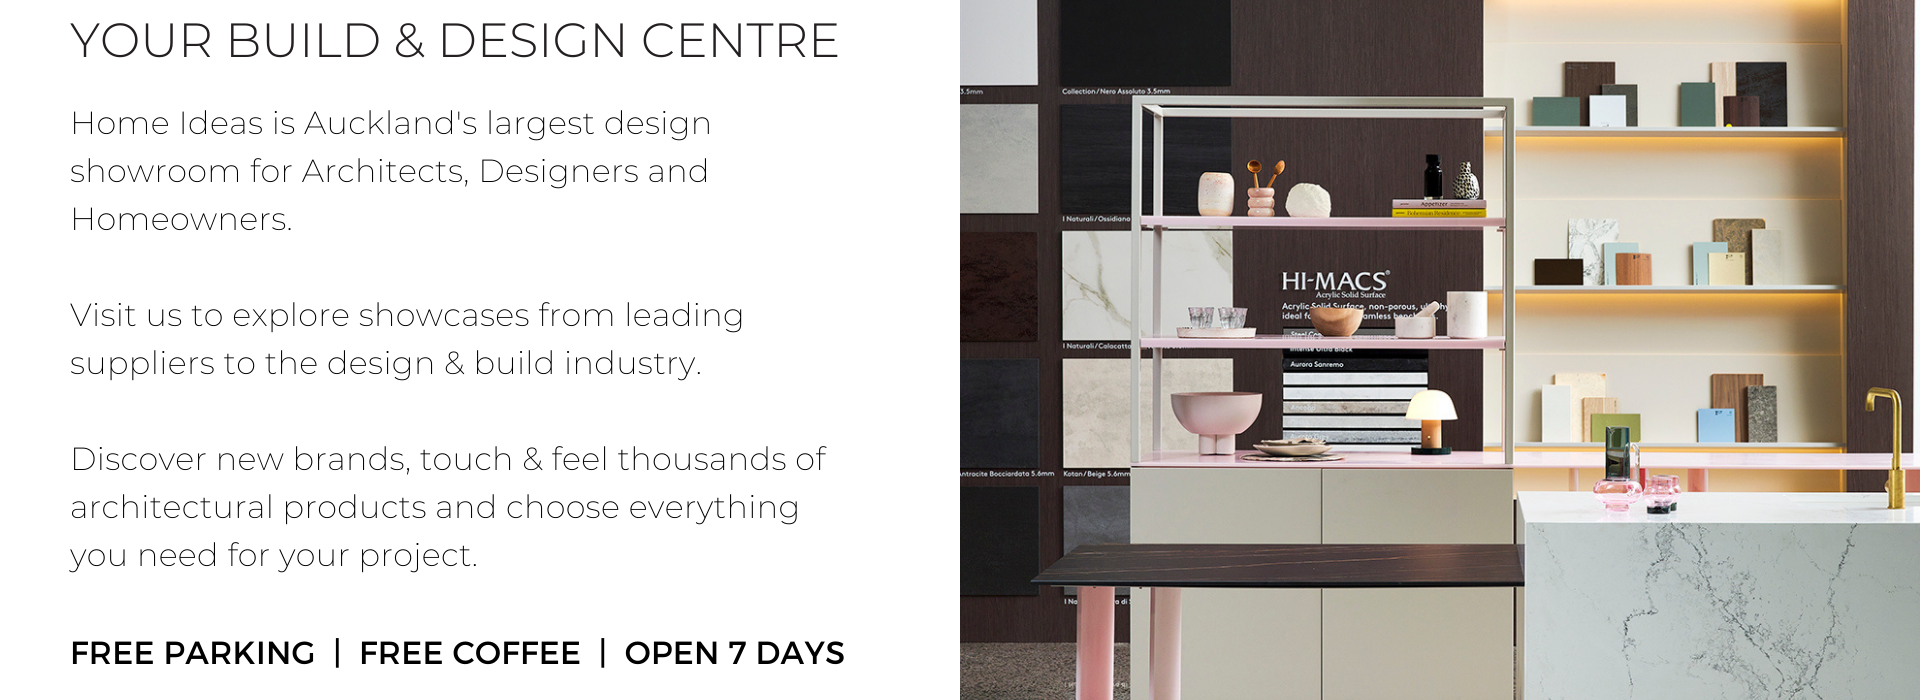 Home Ideas Auckland   Build and Design Centre   Open 10 Days